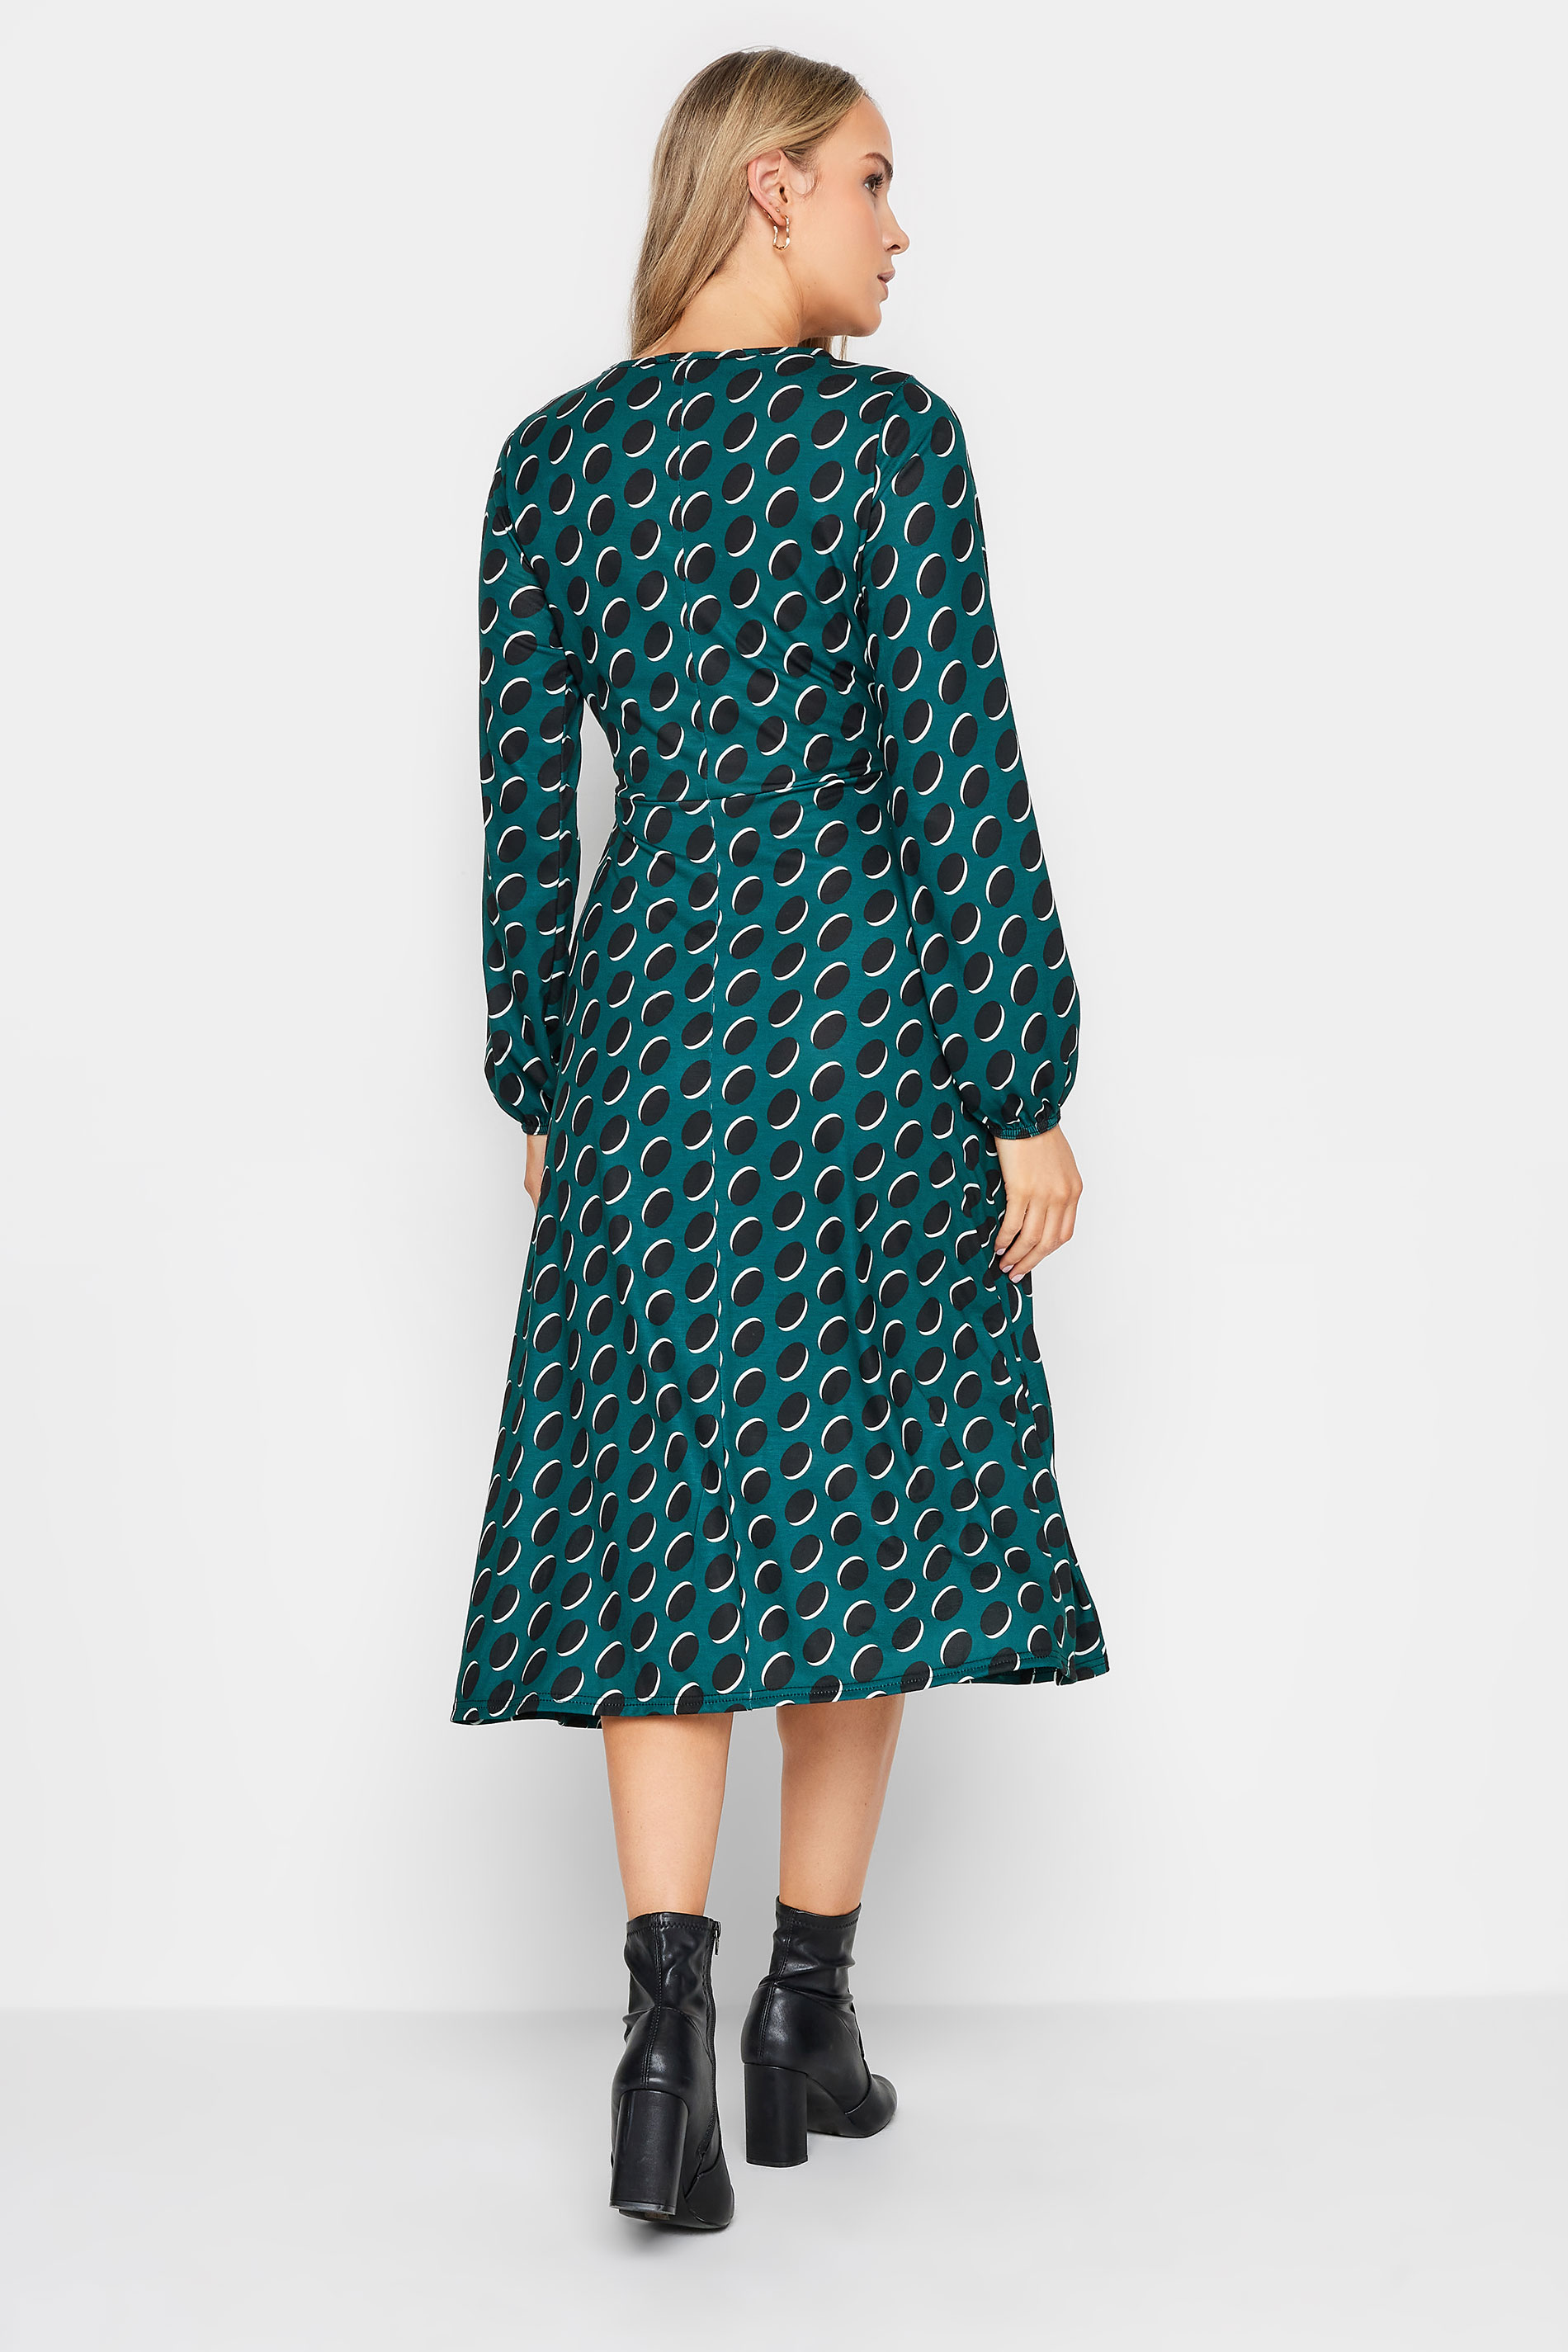 LTS Tall Charcoal Green Spot Print Dress | Long Tall Sally 3